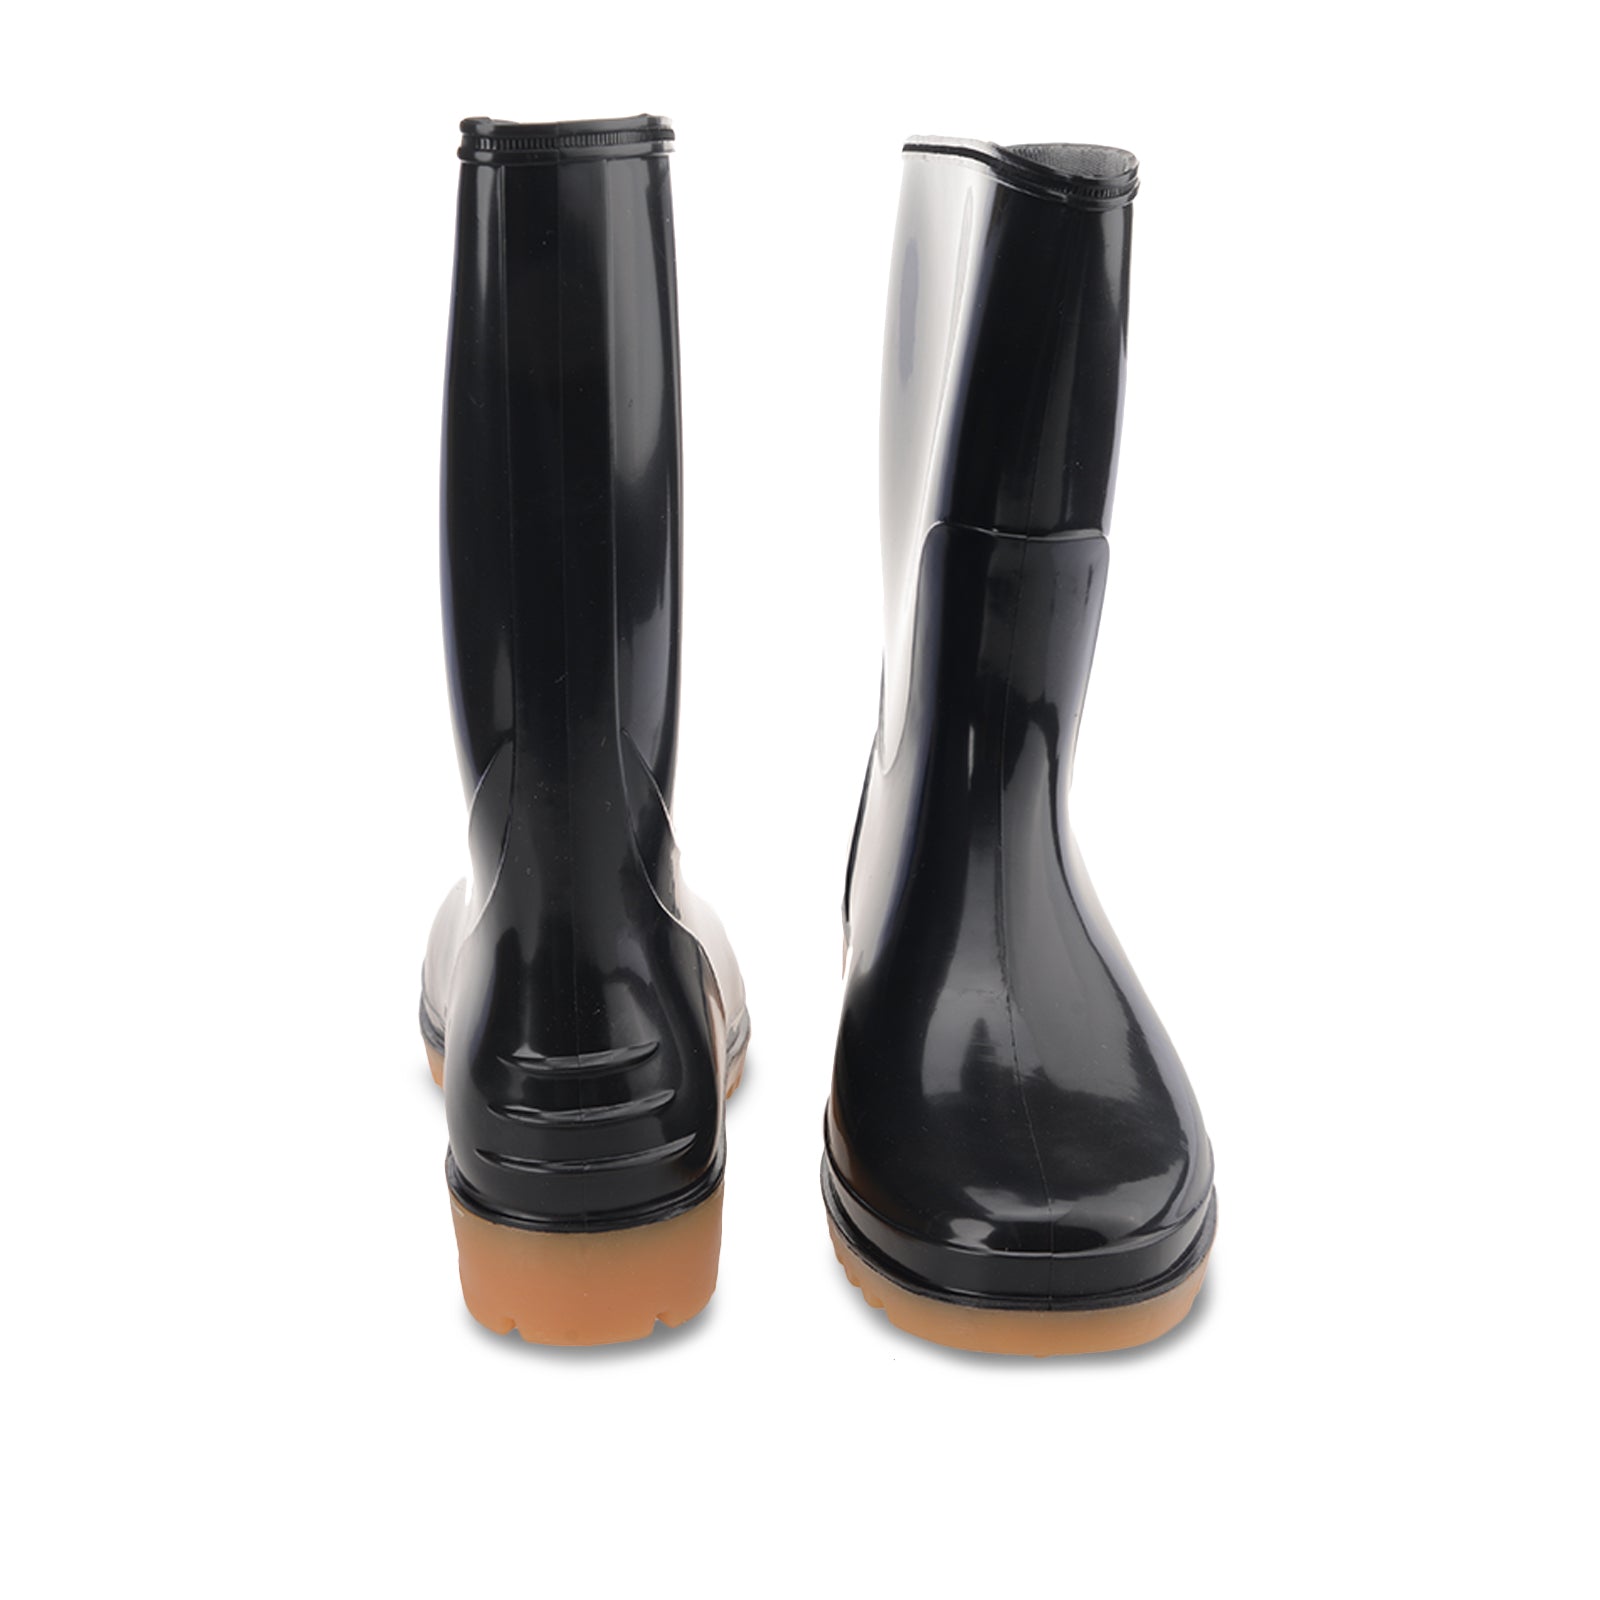 LT301-L Short Labor Rain Boots (Hong Kong Safety Mark)